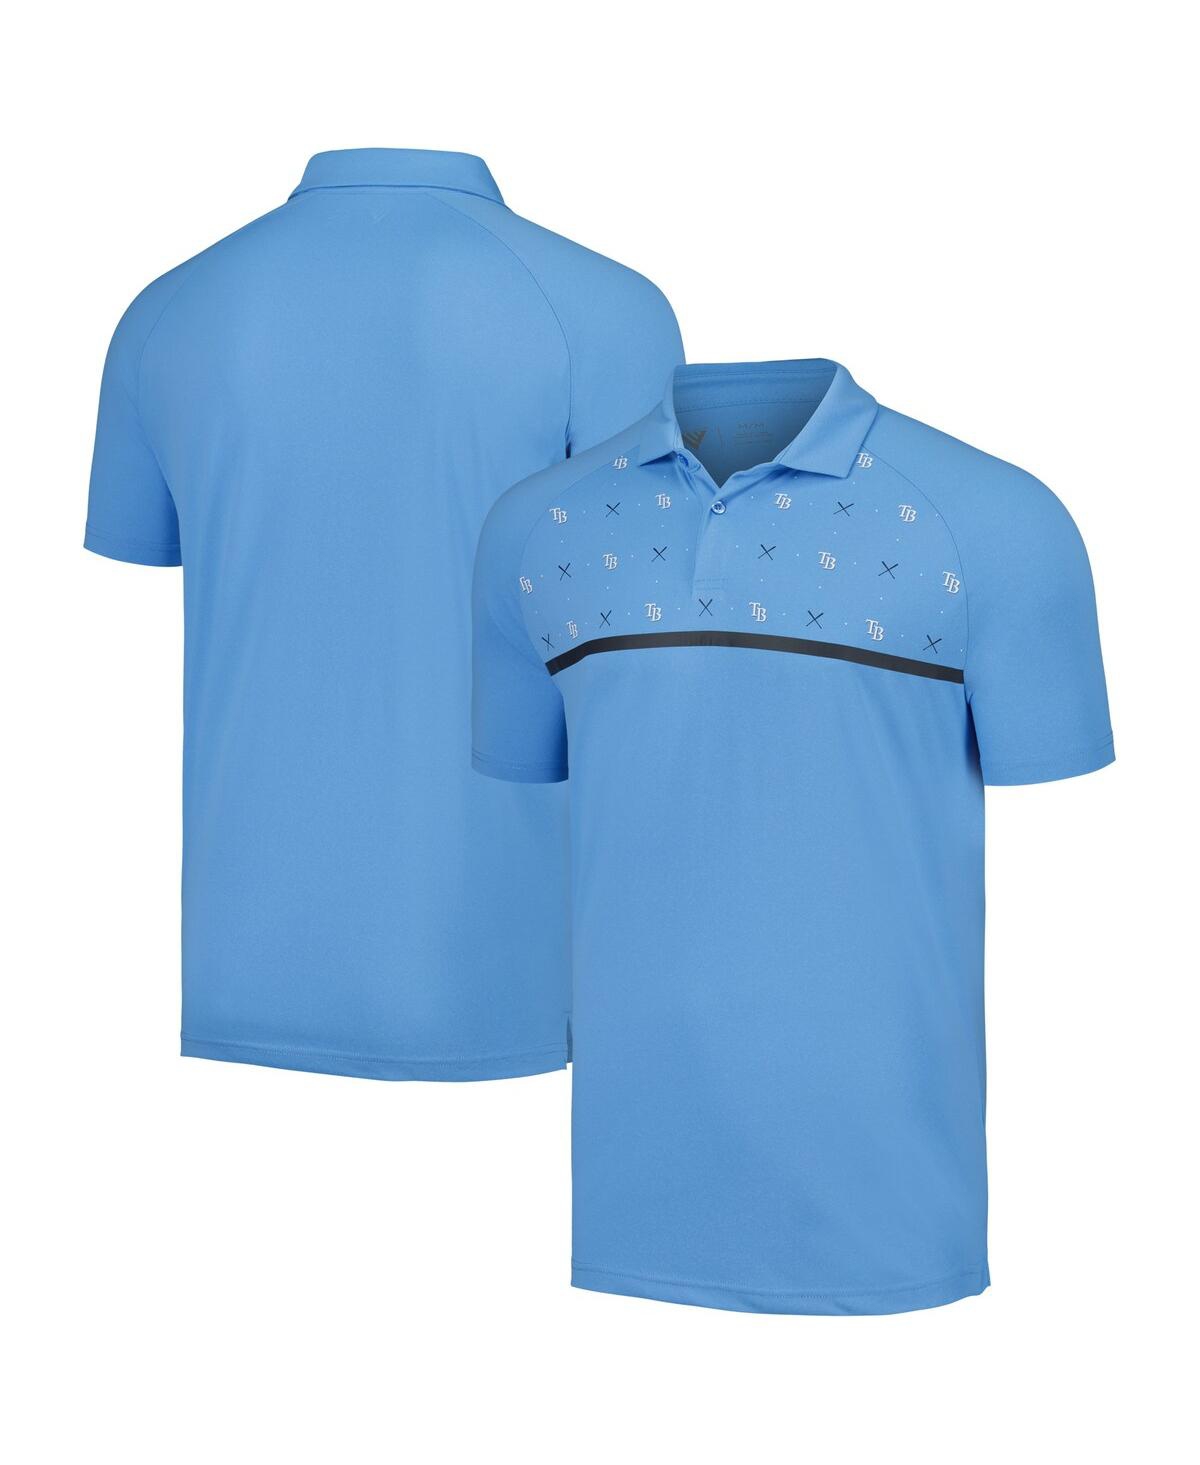 Shop Levelwear Men's  Light Blue Tampa Bay Rays Sector Batter Up Raglan Polo Shirt